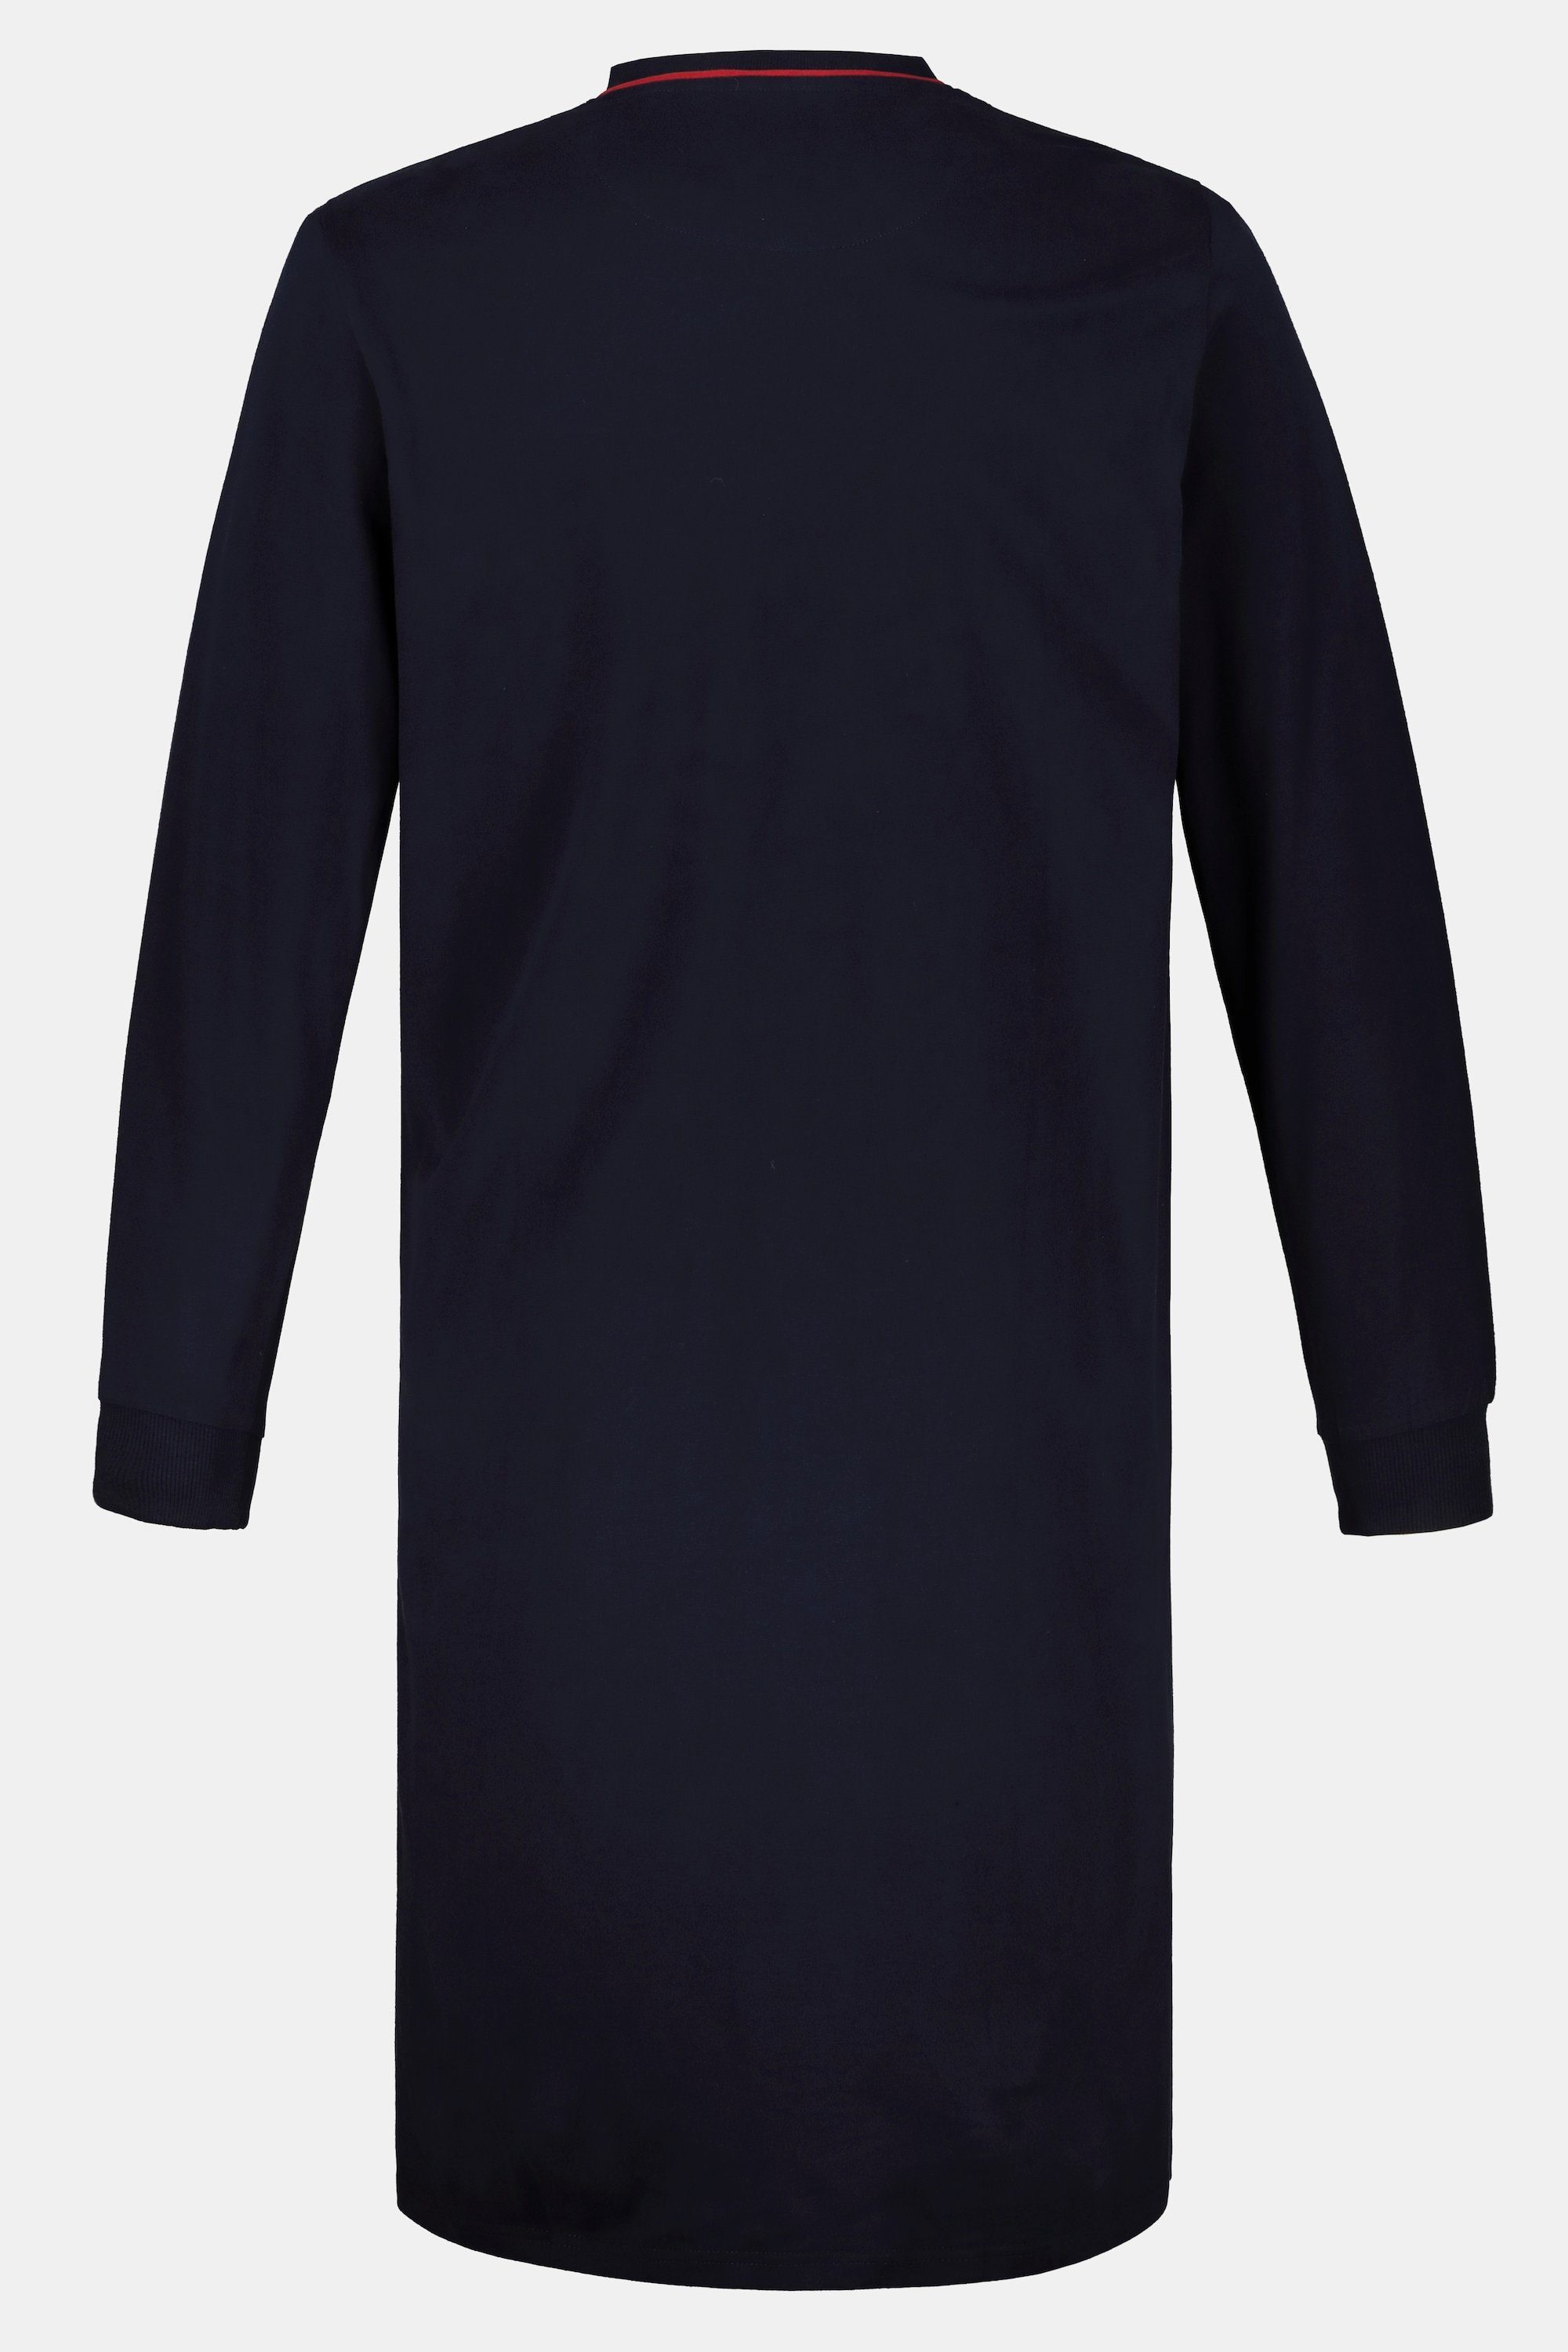 Langarm Gr Schlafanzug Nachthemd dunkel JP1880 bis 8XL marine uni Homewear